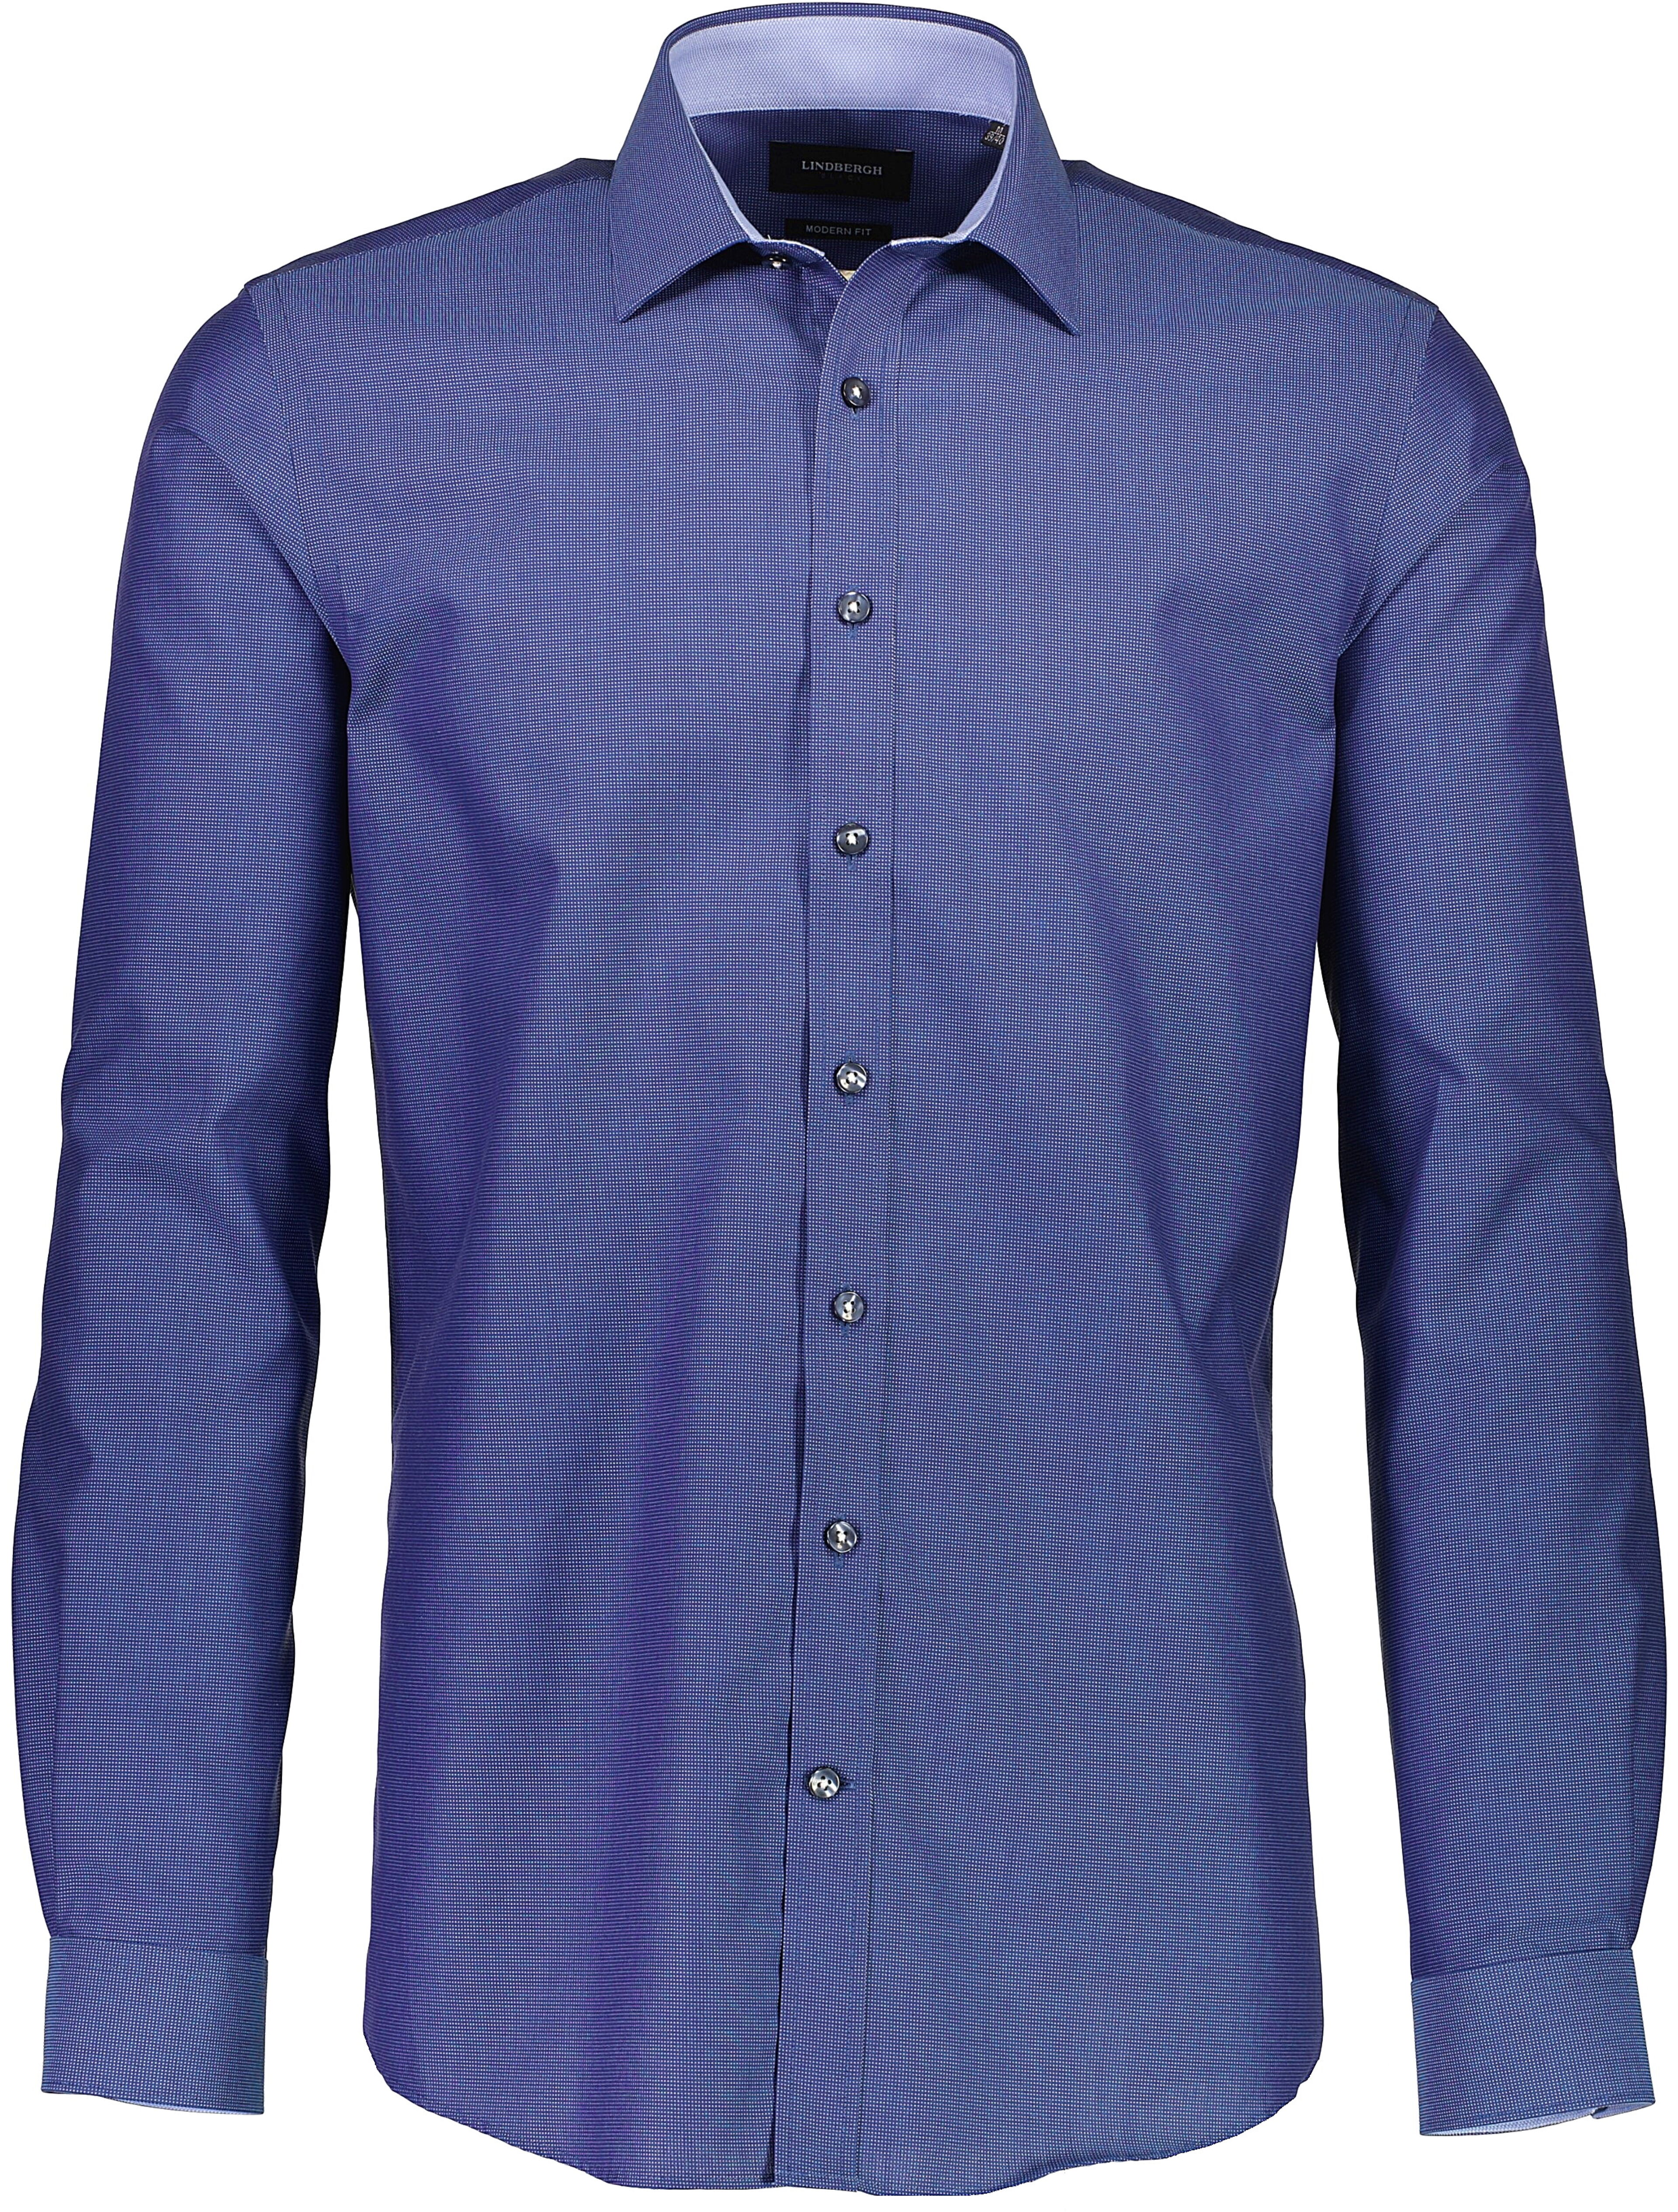 Business casual shirt | Modern fit 30-242094